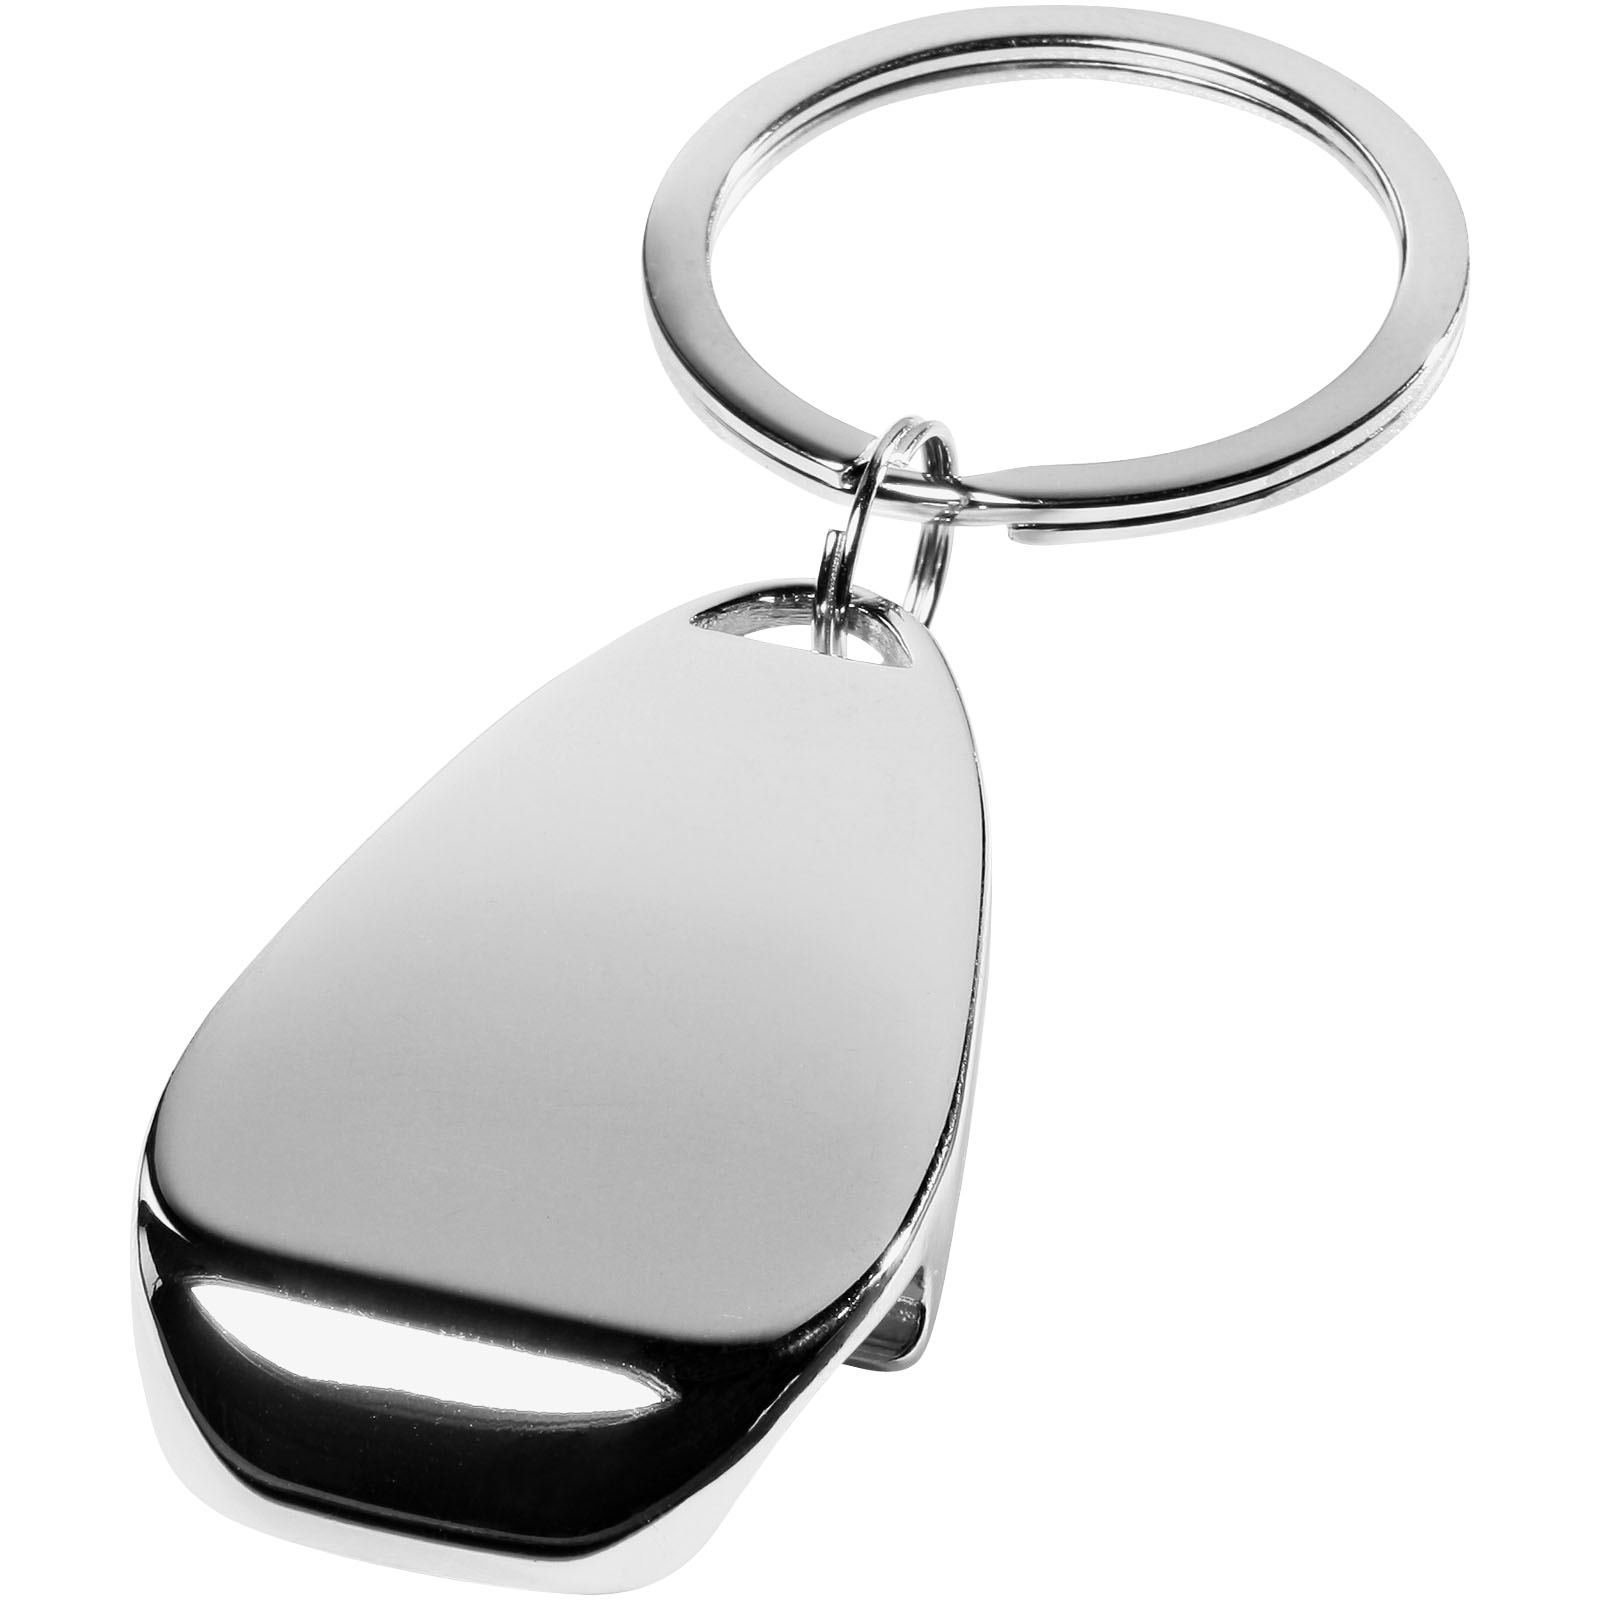 Advertising Bottle Openers & Accessories - Don bottle opener keychain - 4